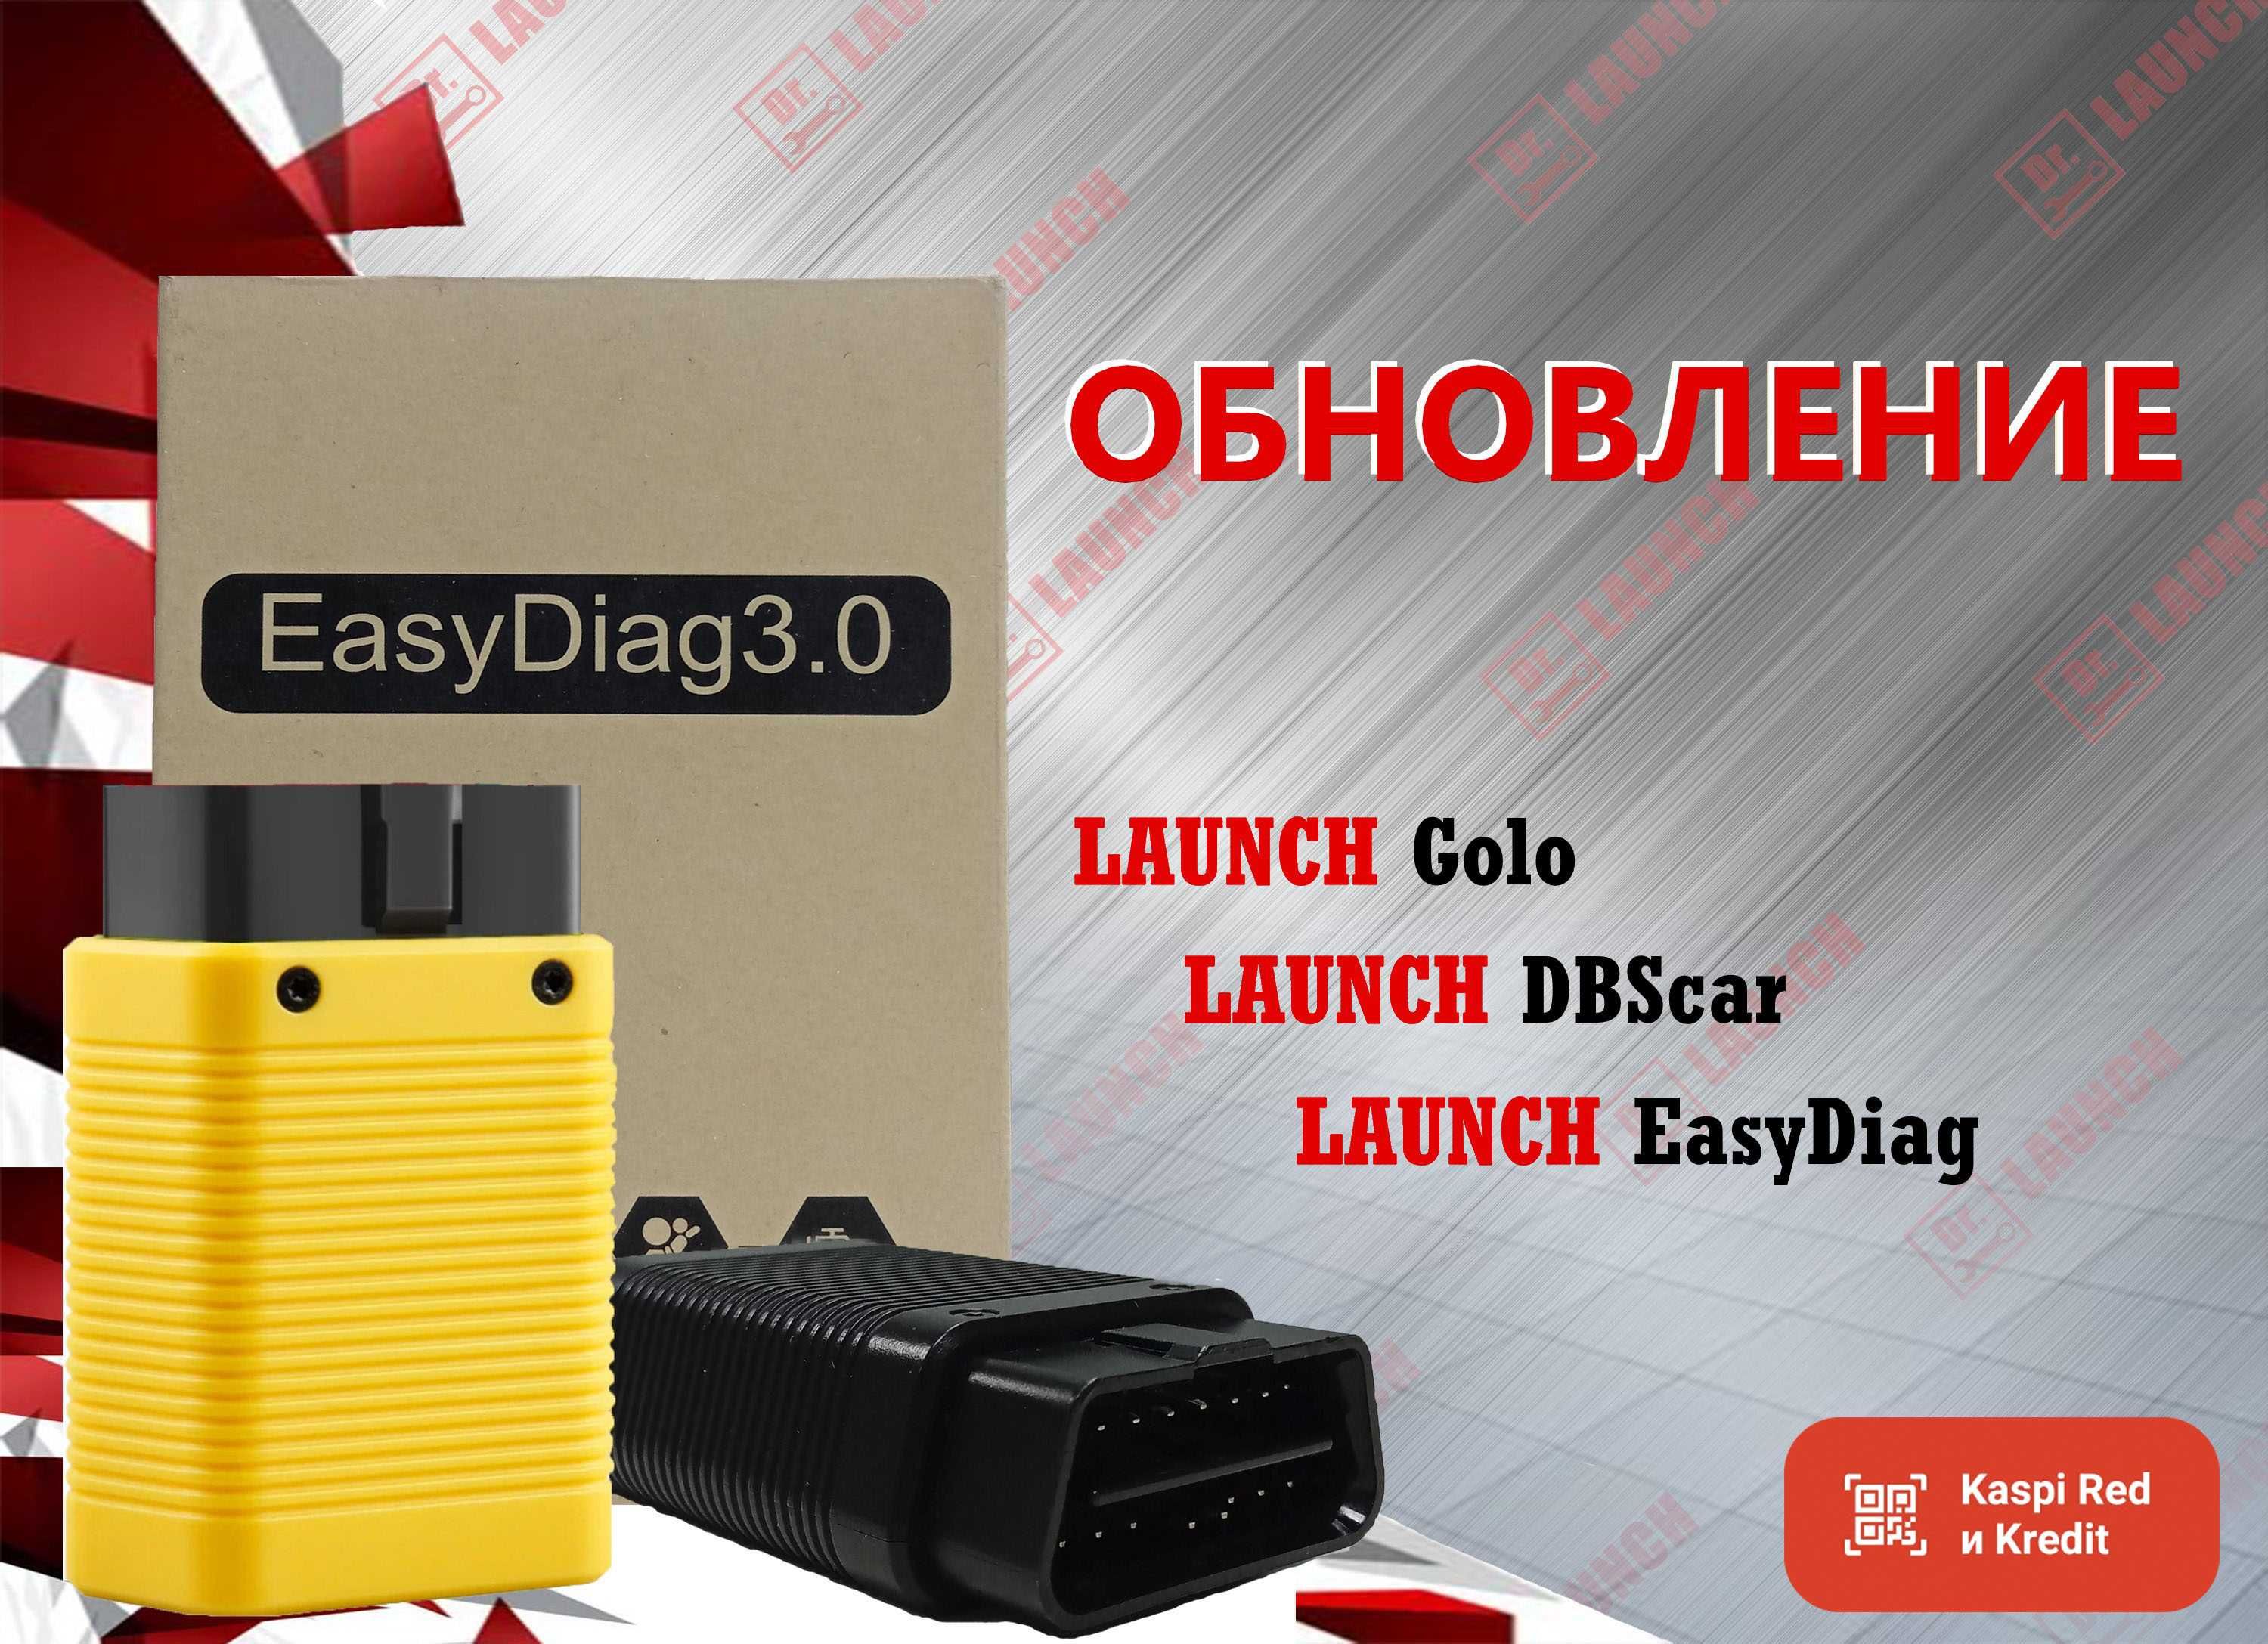 Лаунч Launch easydiag golo 3.0 update X431pro5